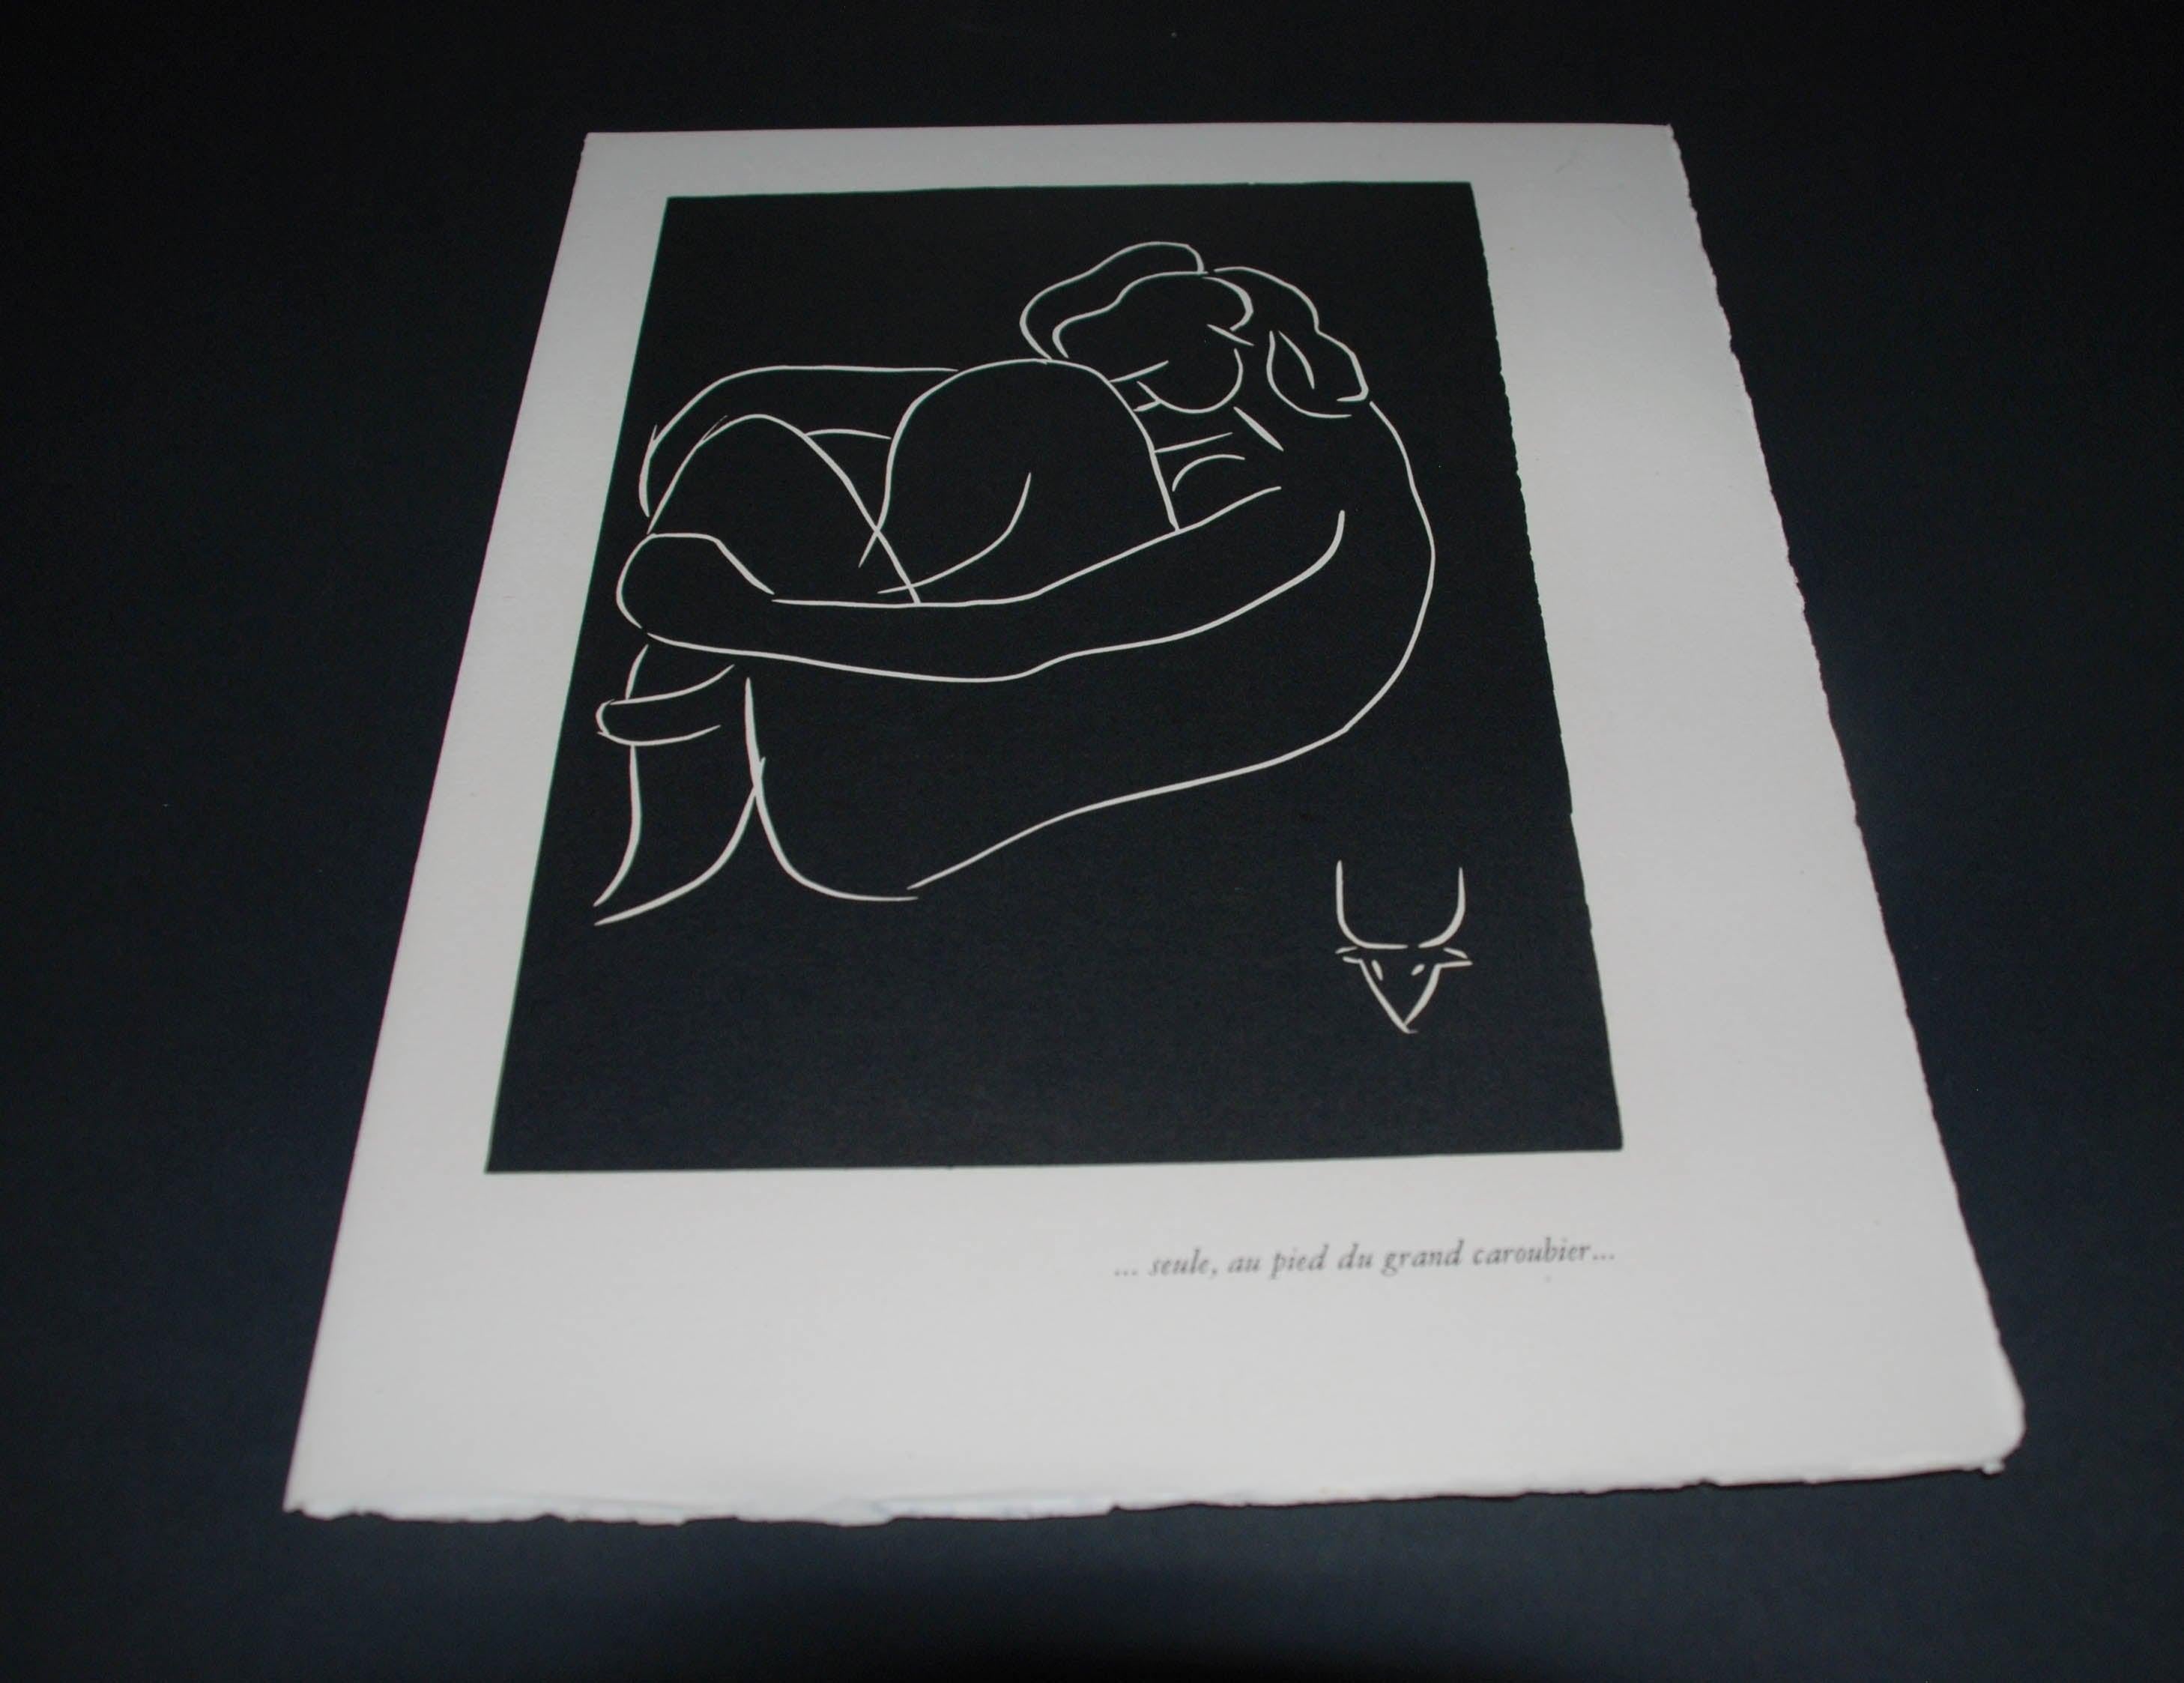 Pasiphae-Teller 12: Seule, au pied du grand caroubier – Print von Henri Matisse